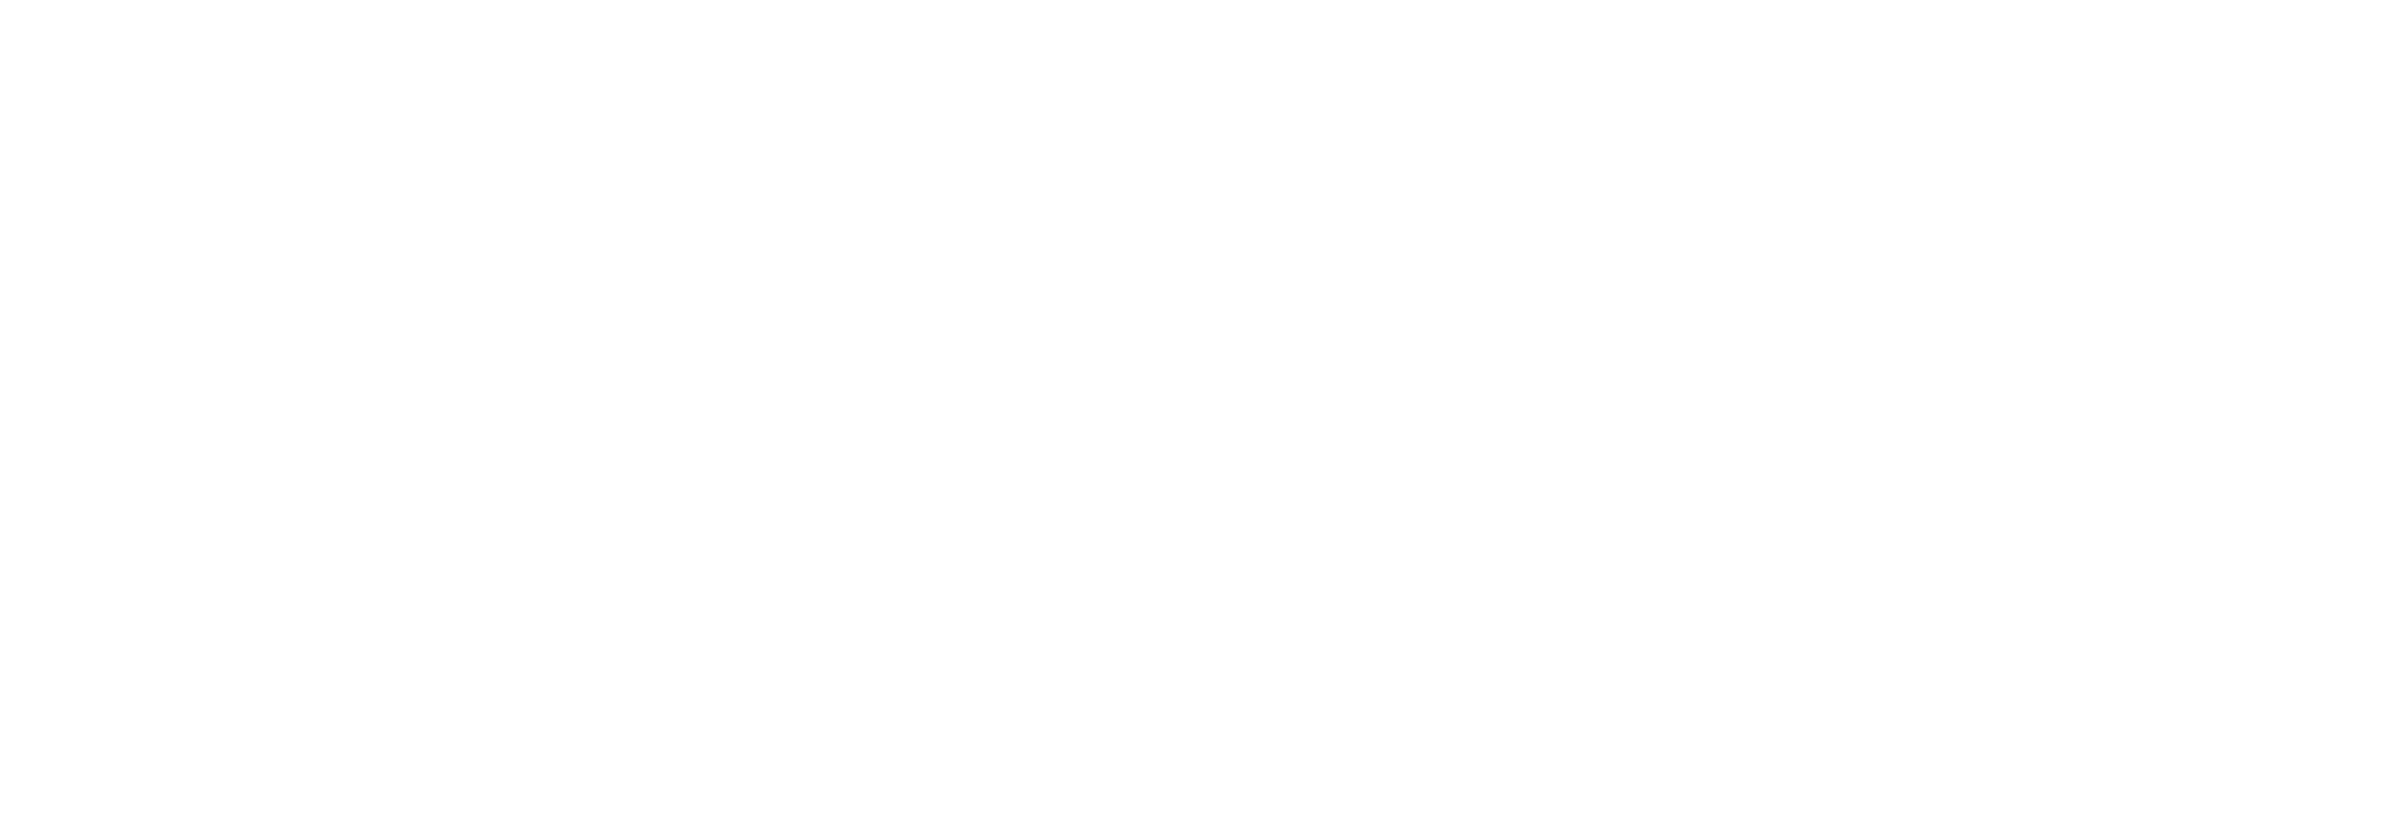 Rockwell Logo - Rockwell In Laguna Orig